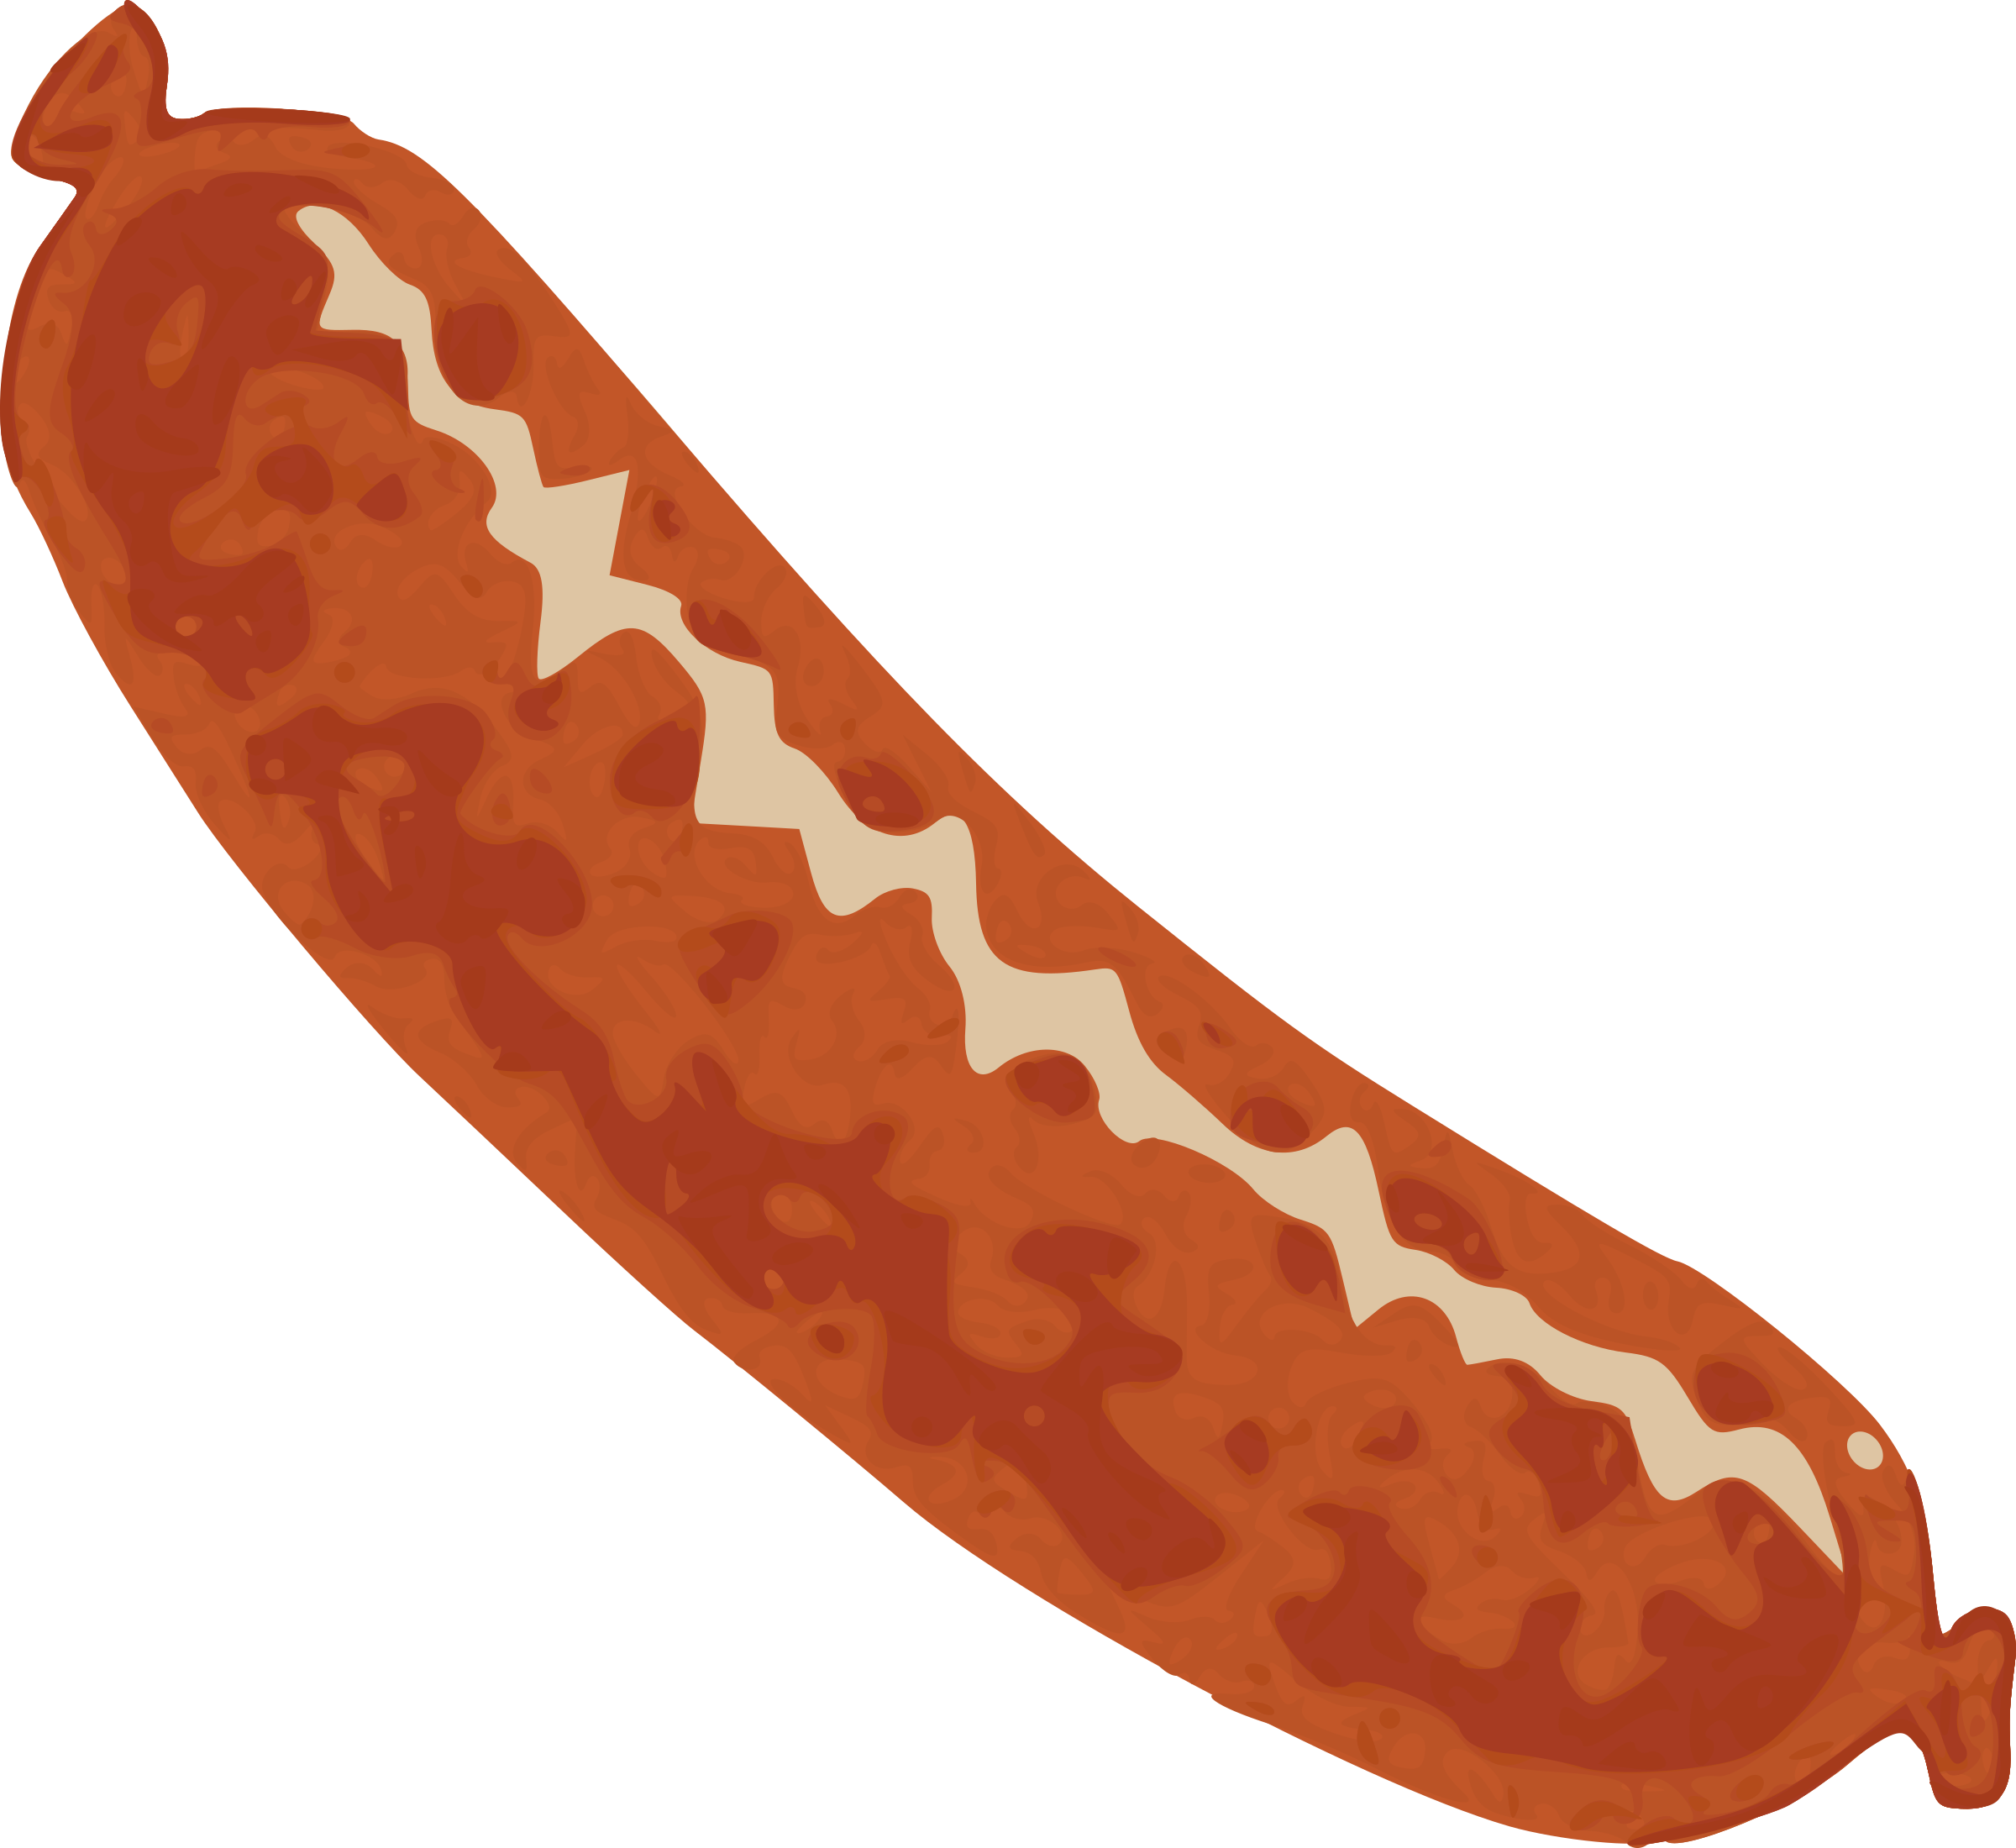 Big Image (Png) - Sausage, Transparent background PNG HD thumbnail